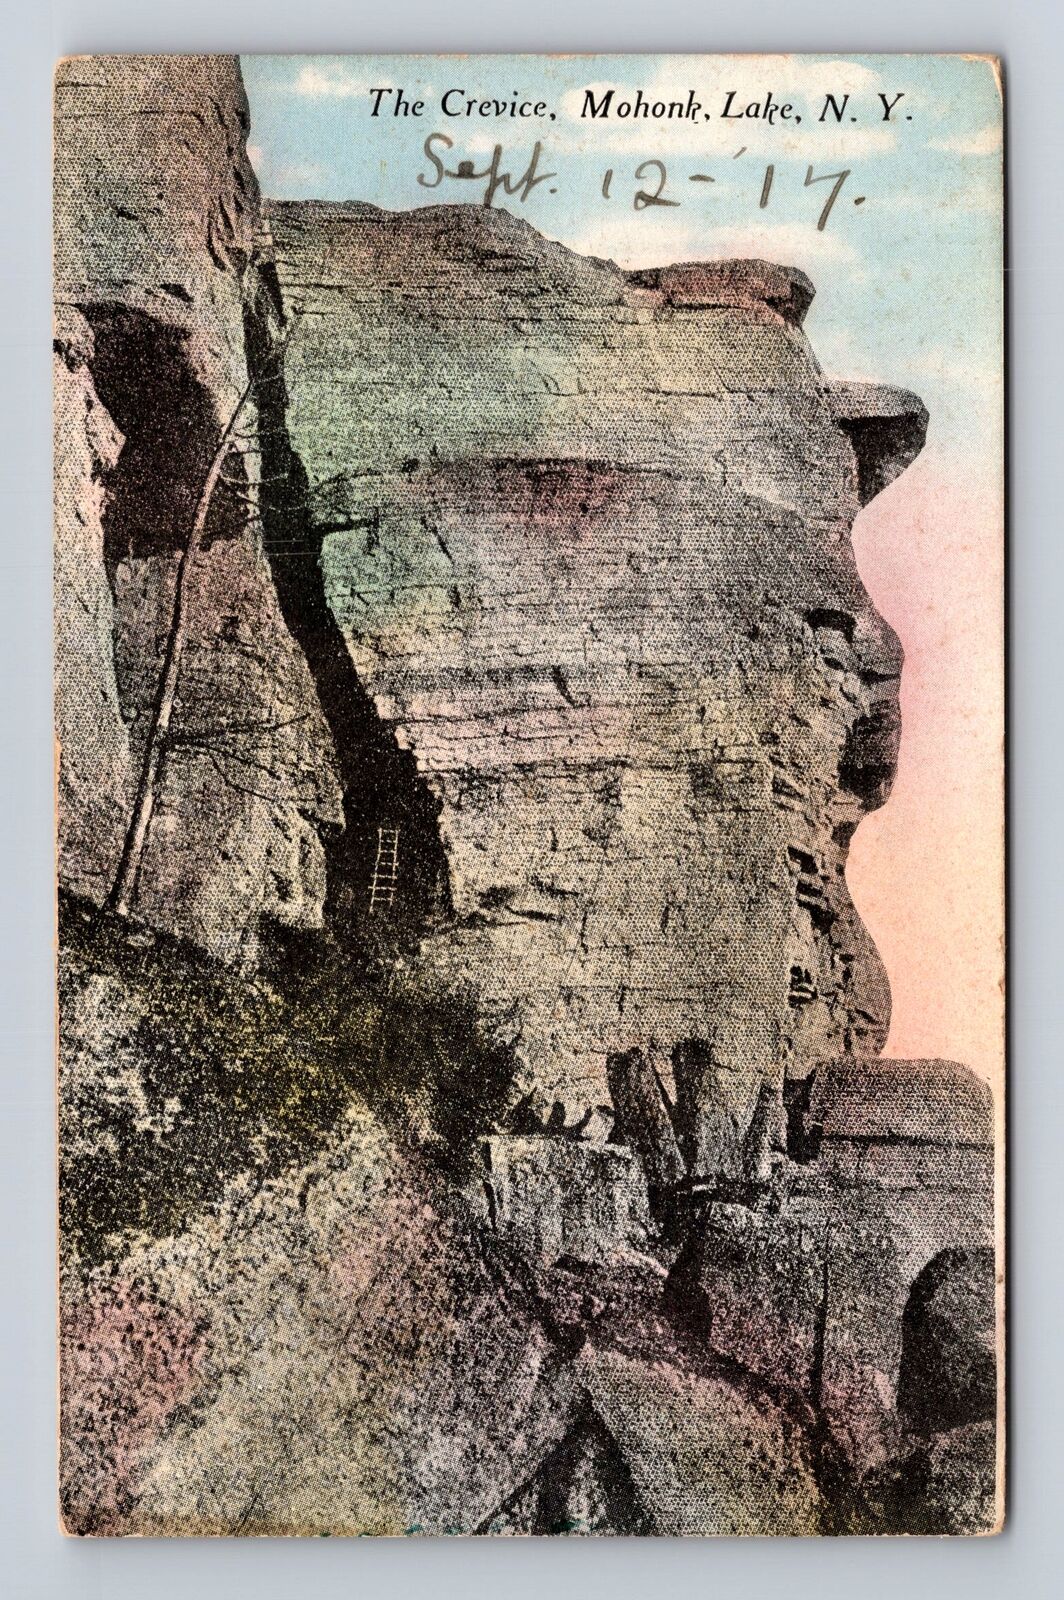 Mohonk Lake NY-New York, The Crevice Rock Formation, Vintage Souvenir Postcard